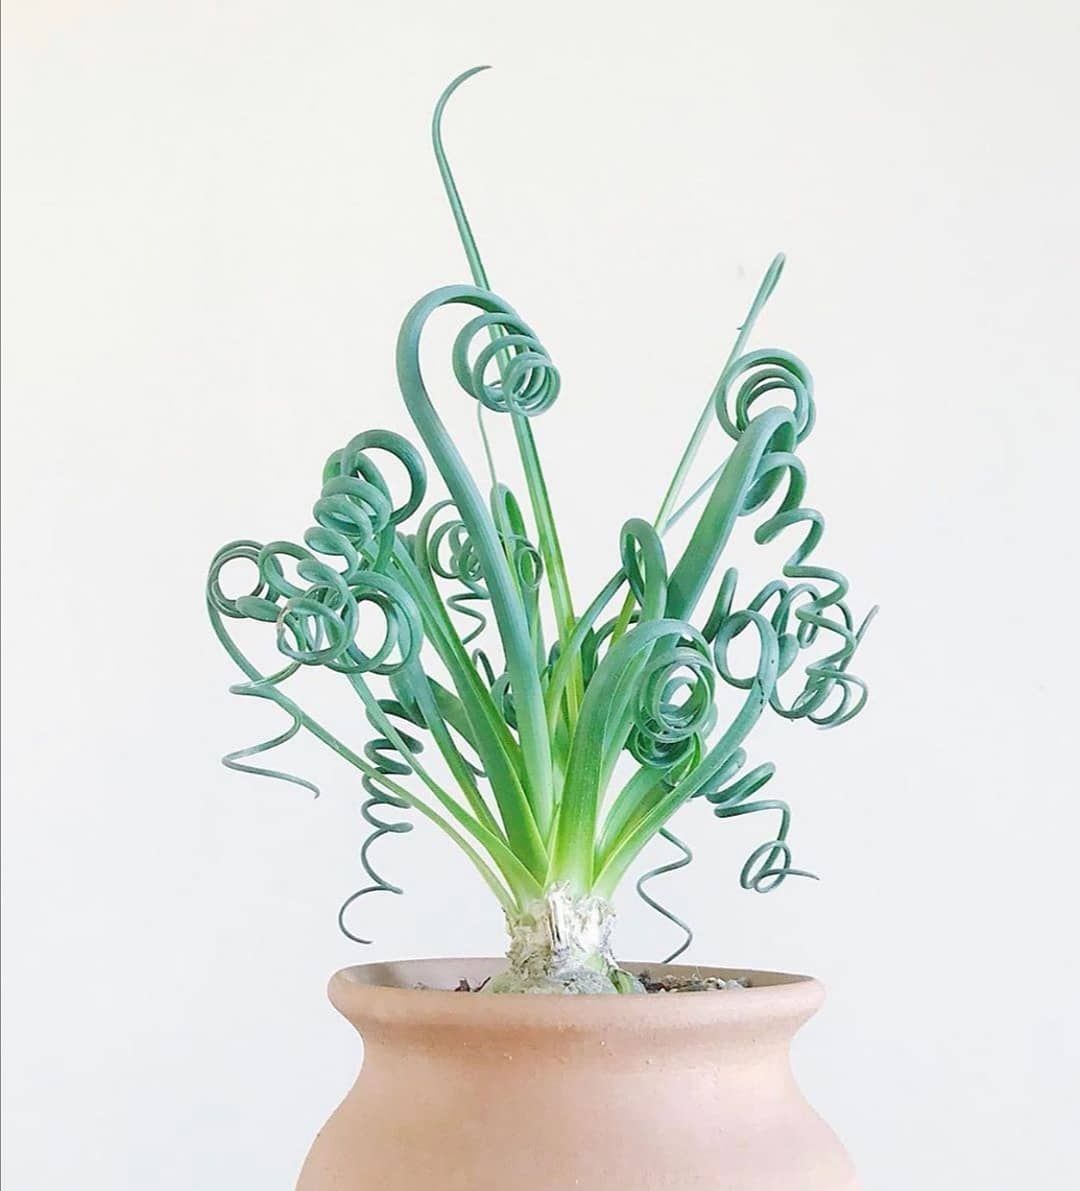 Frizzle Sizzle Albuca Spiralis -   15 plants Tumblr earth ideas